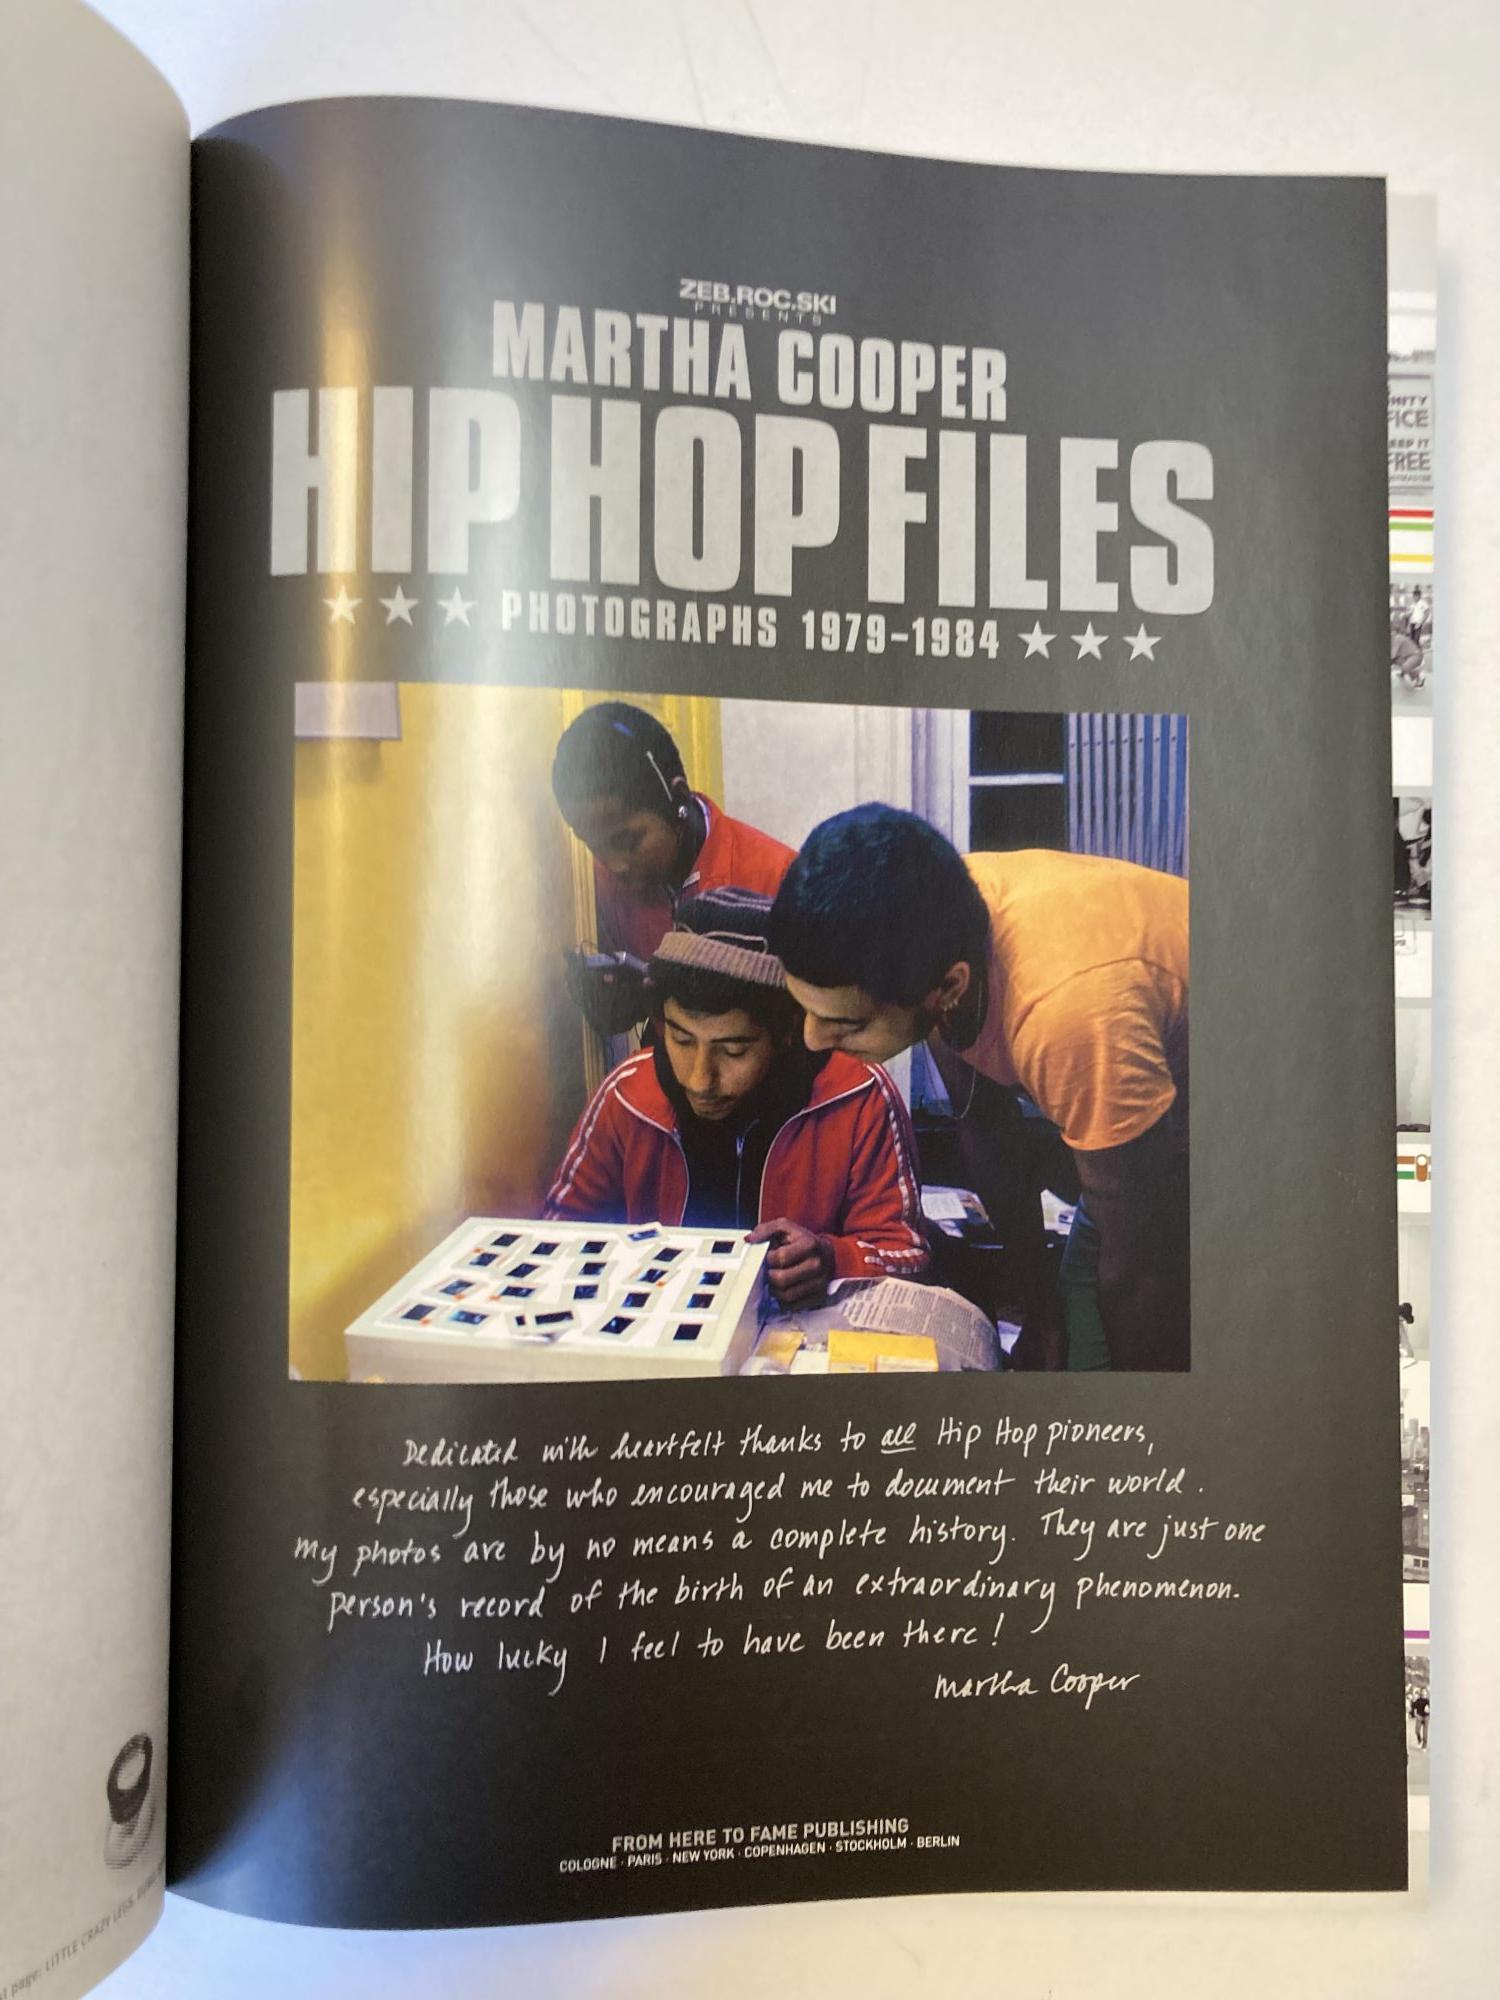 HIP HOP FILES: PHOTOGRAPHS 1979-1984 by Martha Cooper